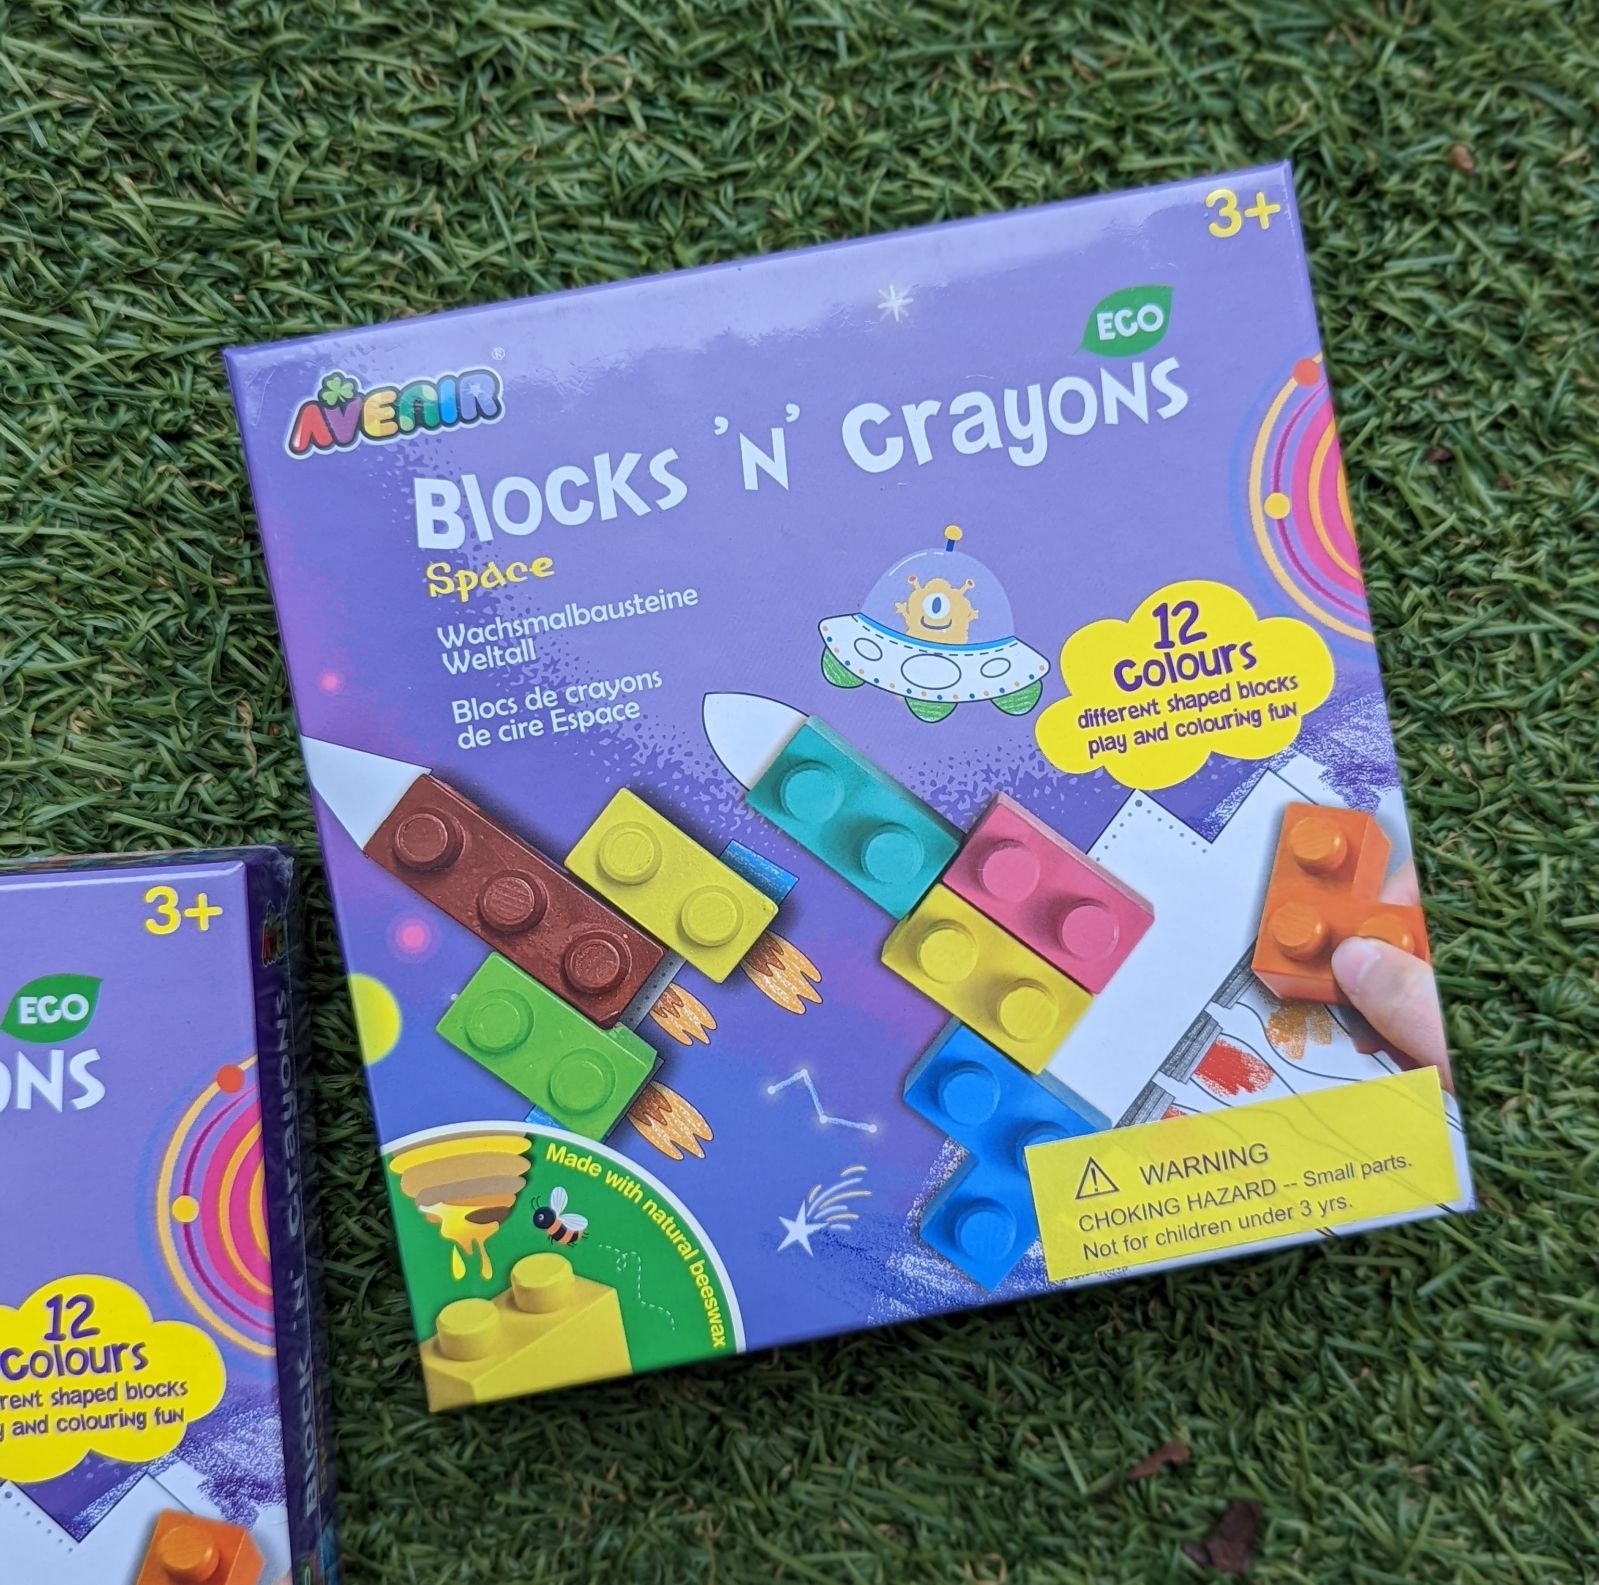 Avenir Blocks & Crayons Activity Kit - Space